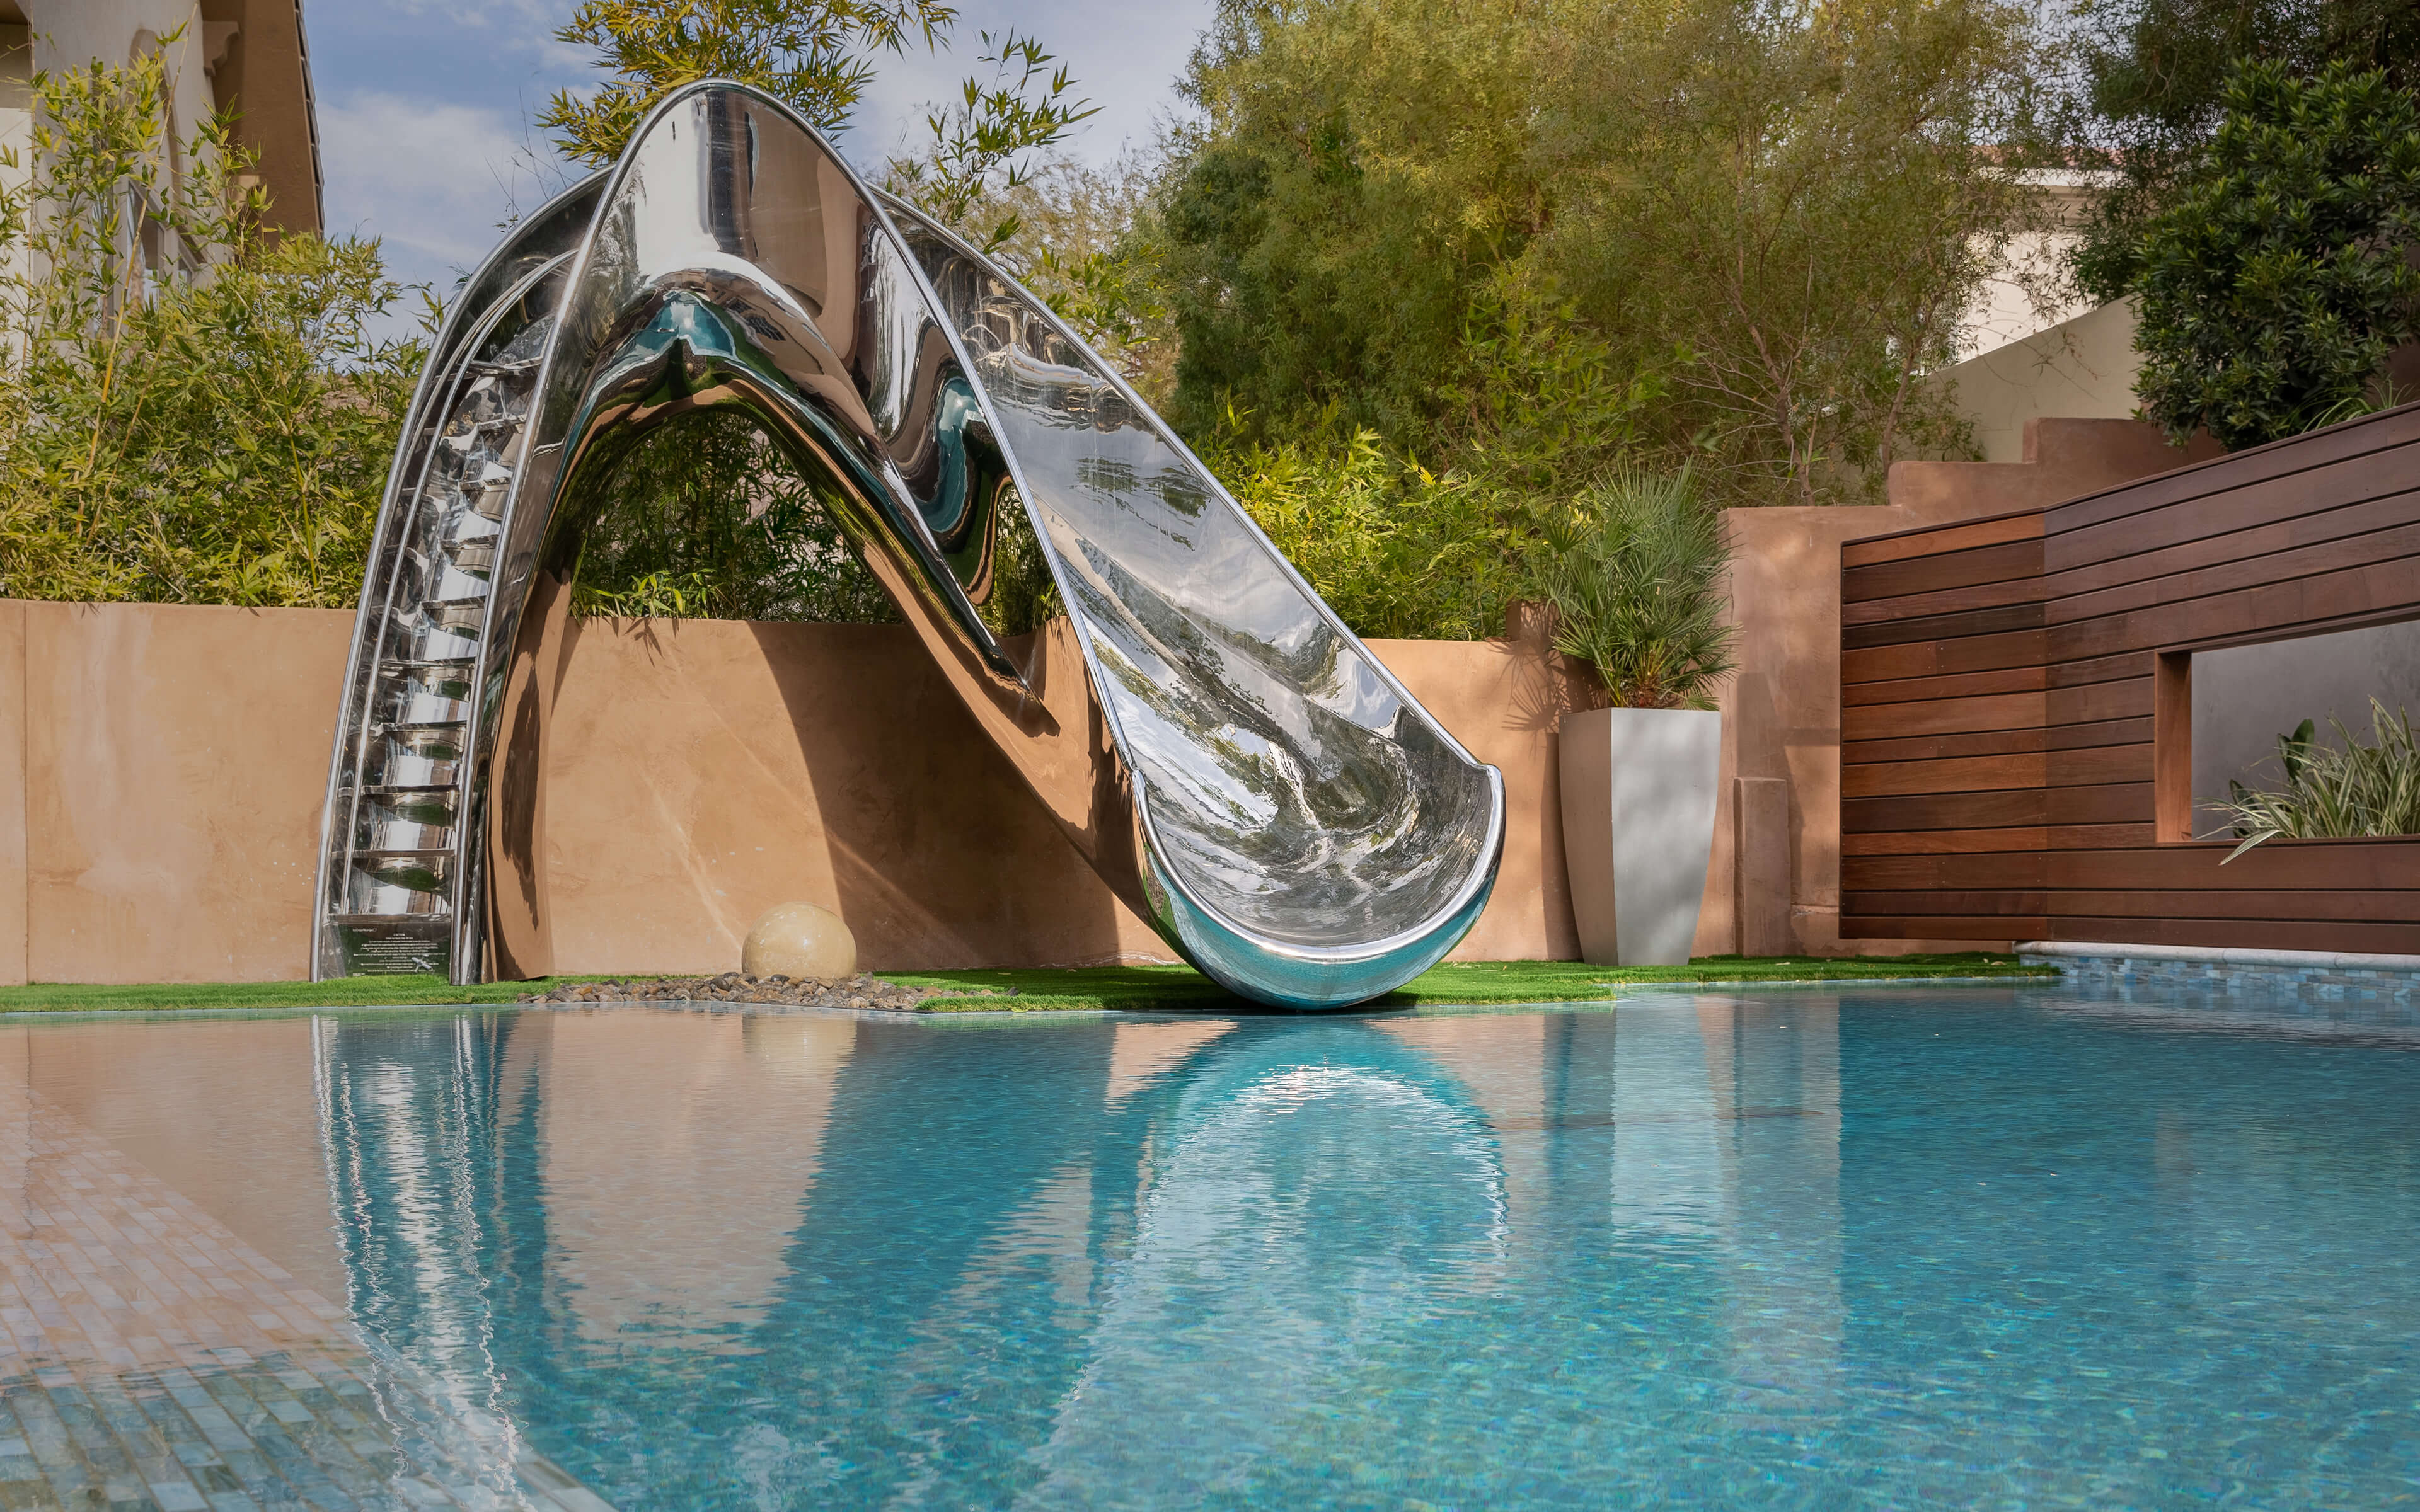 Make a splash with these designer men's pool slides to buy this summer